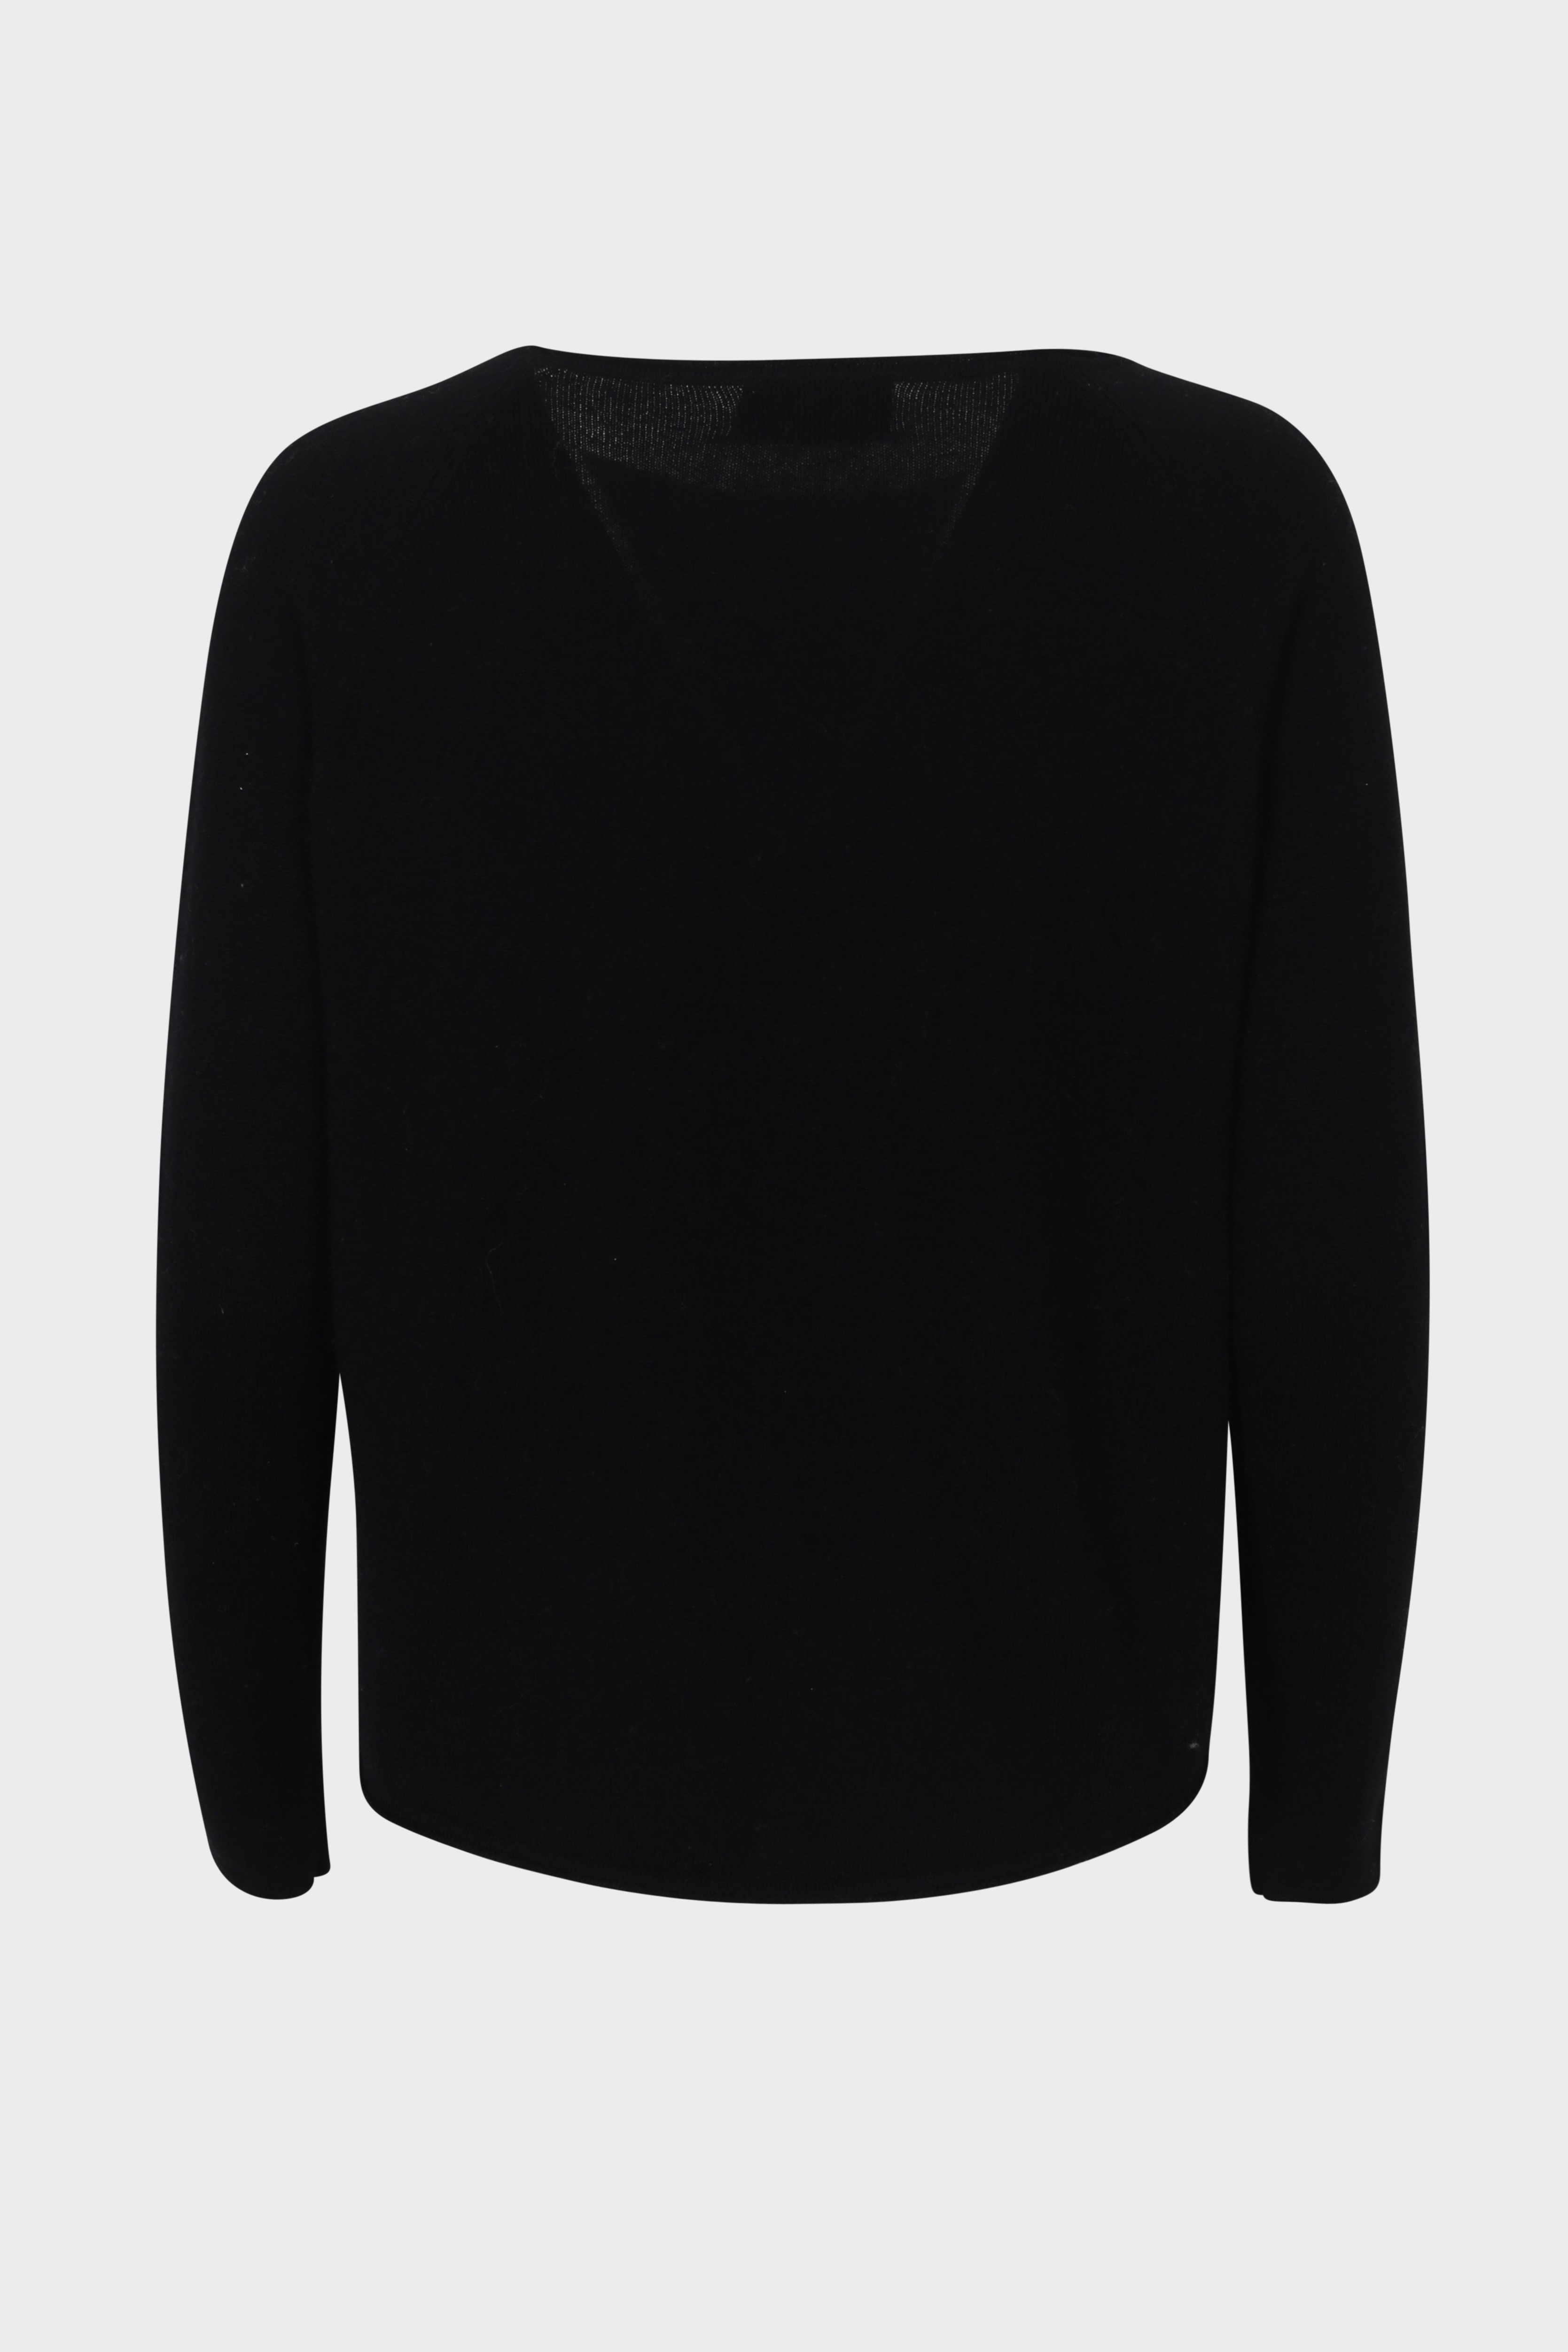 FLONA Cashmere Sweater in Black XL